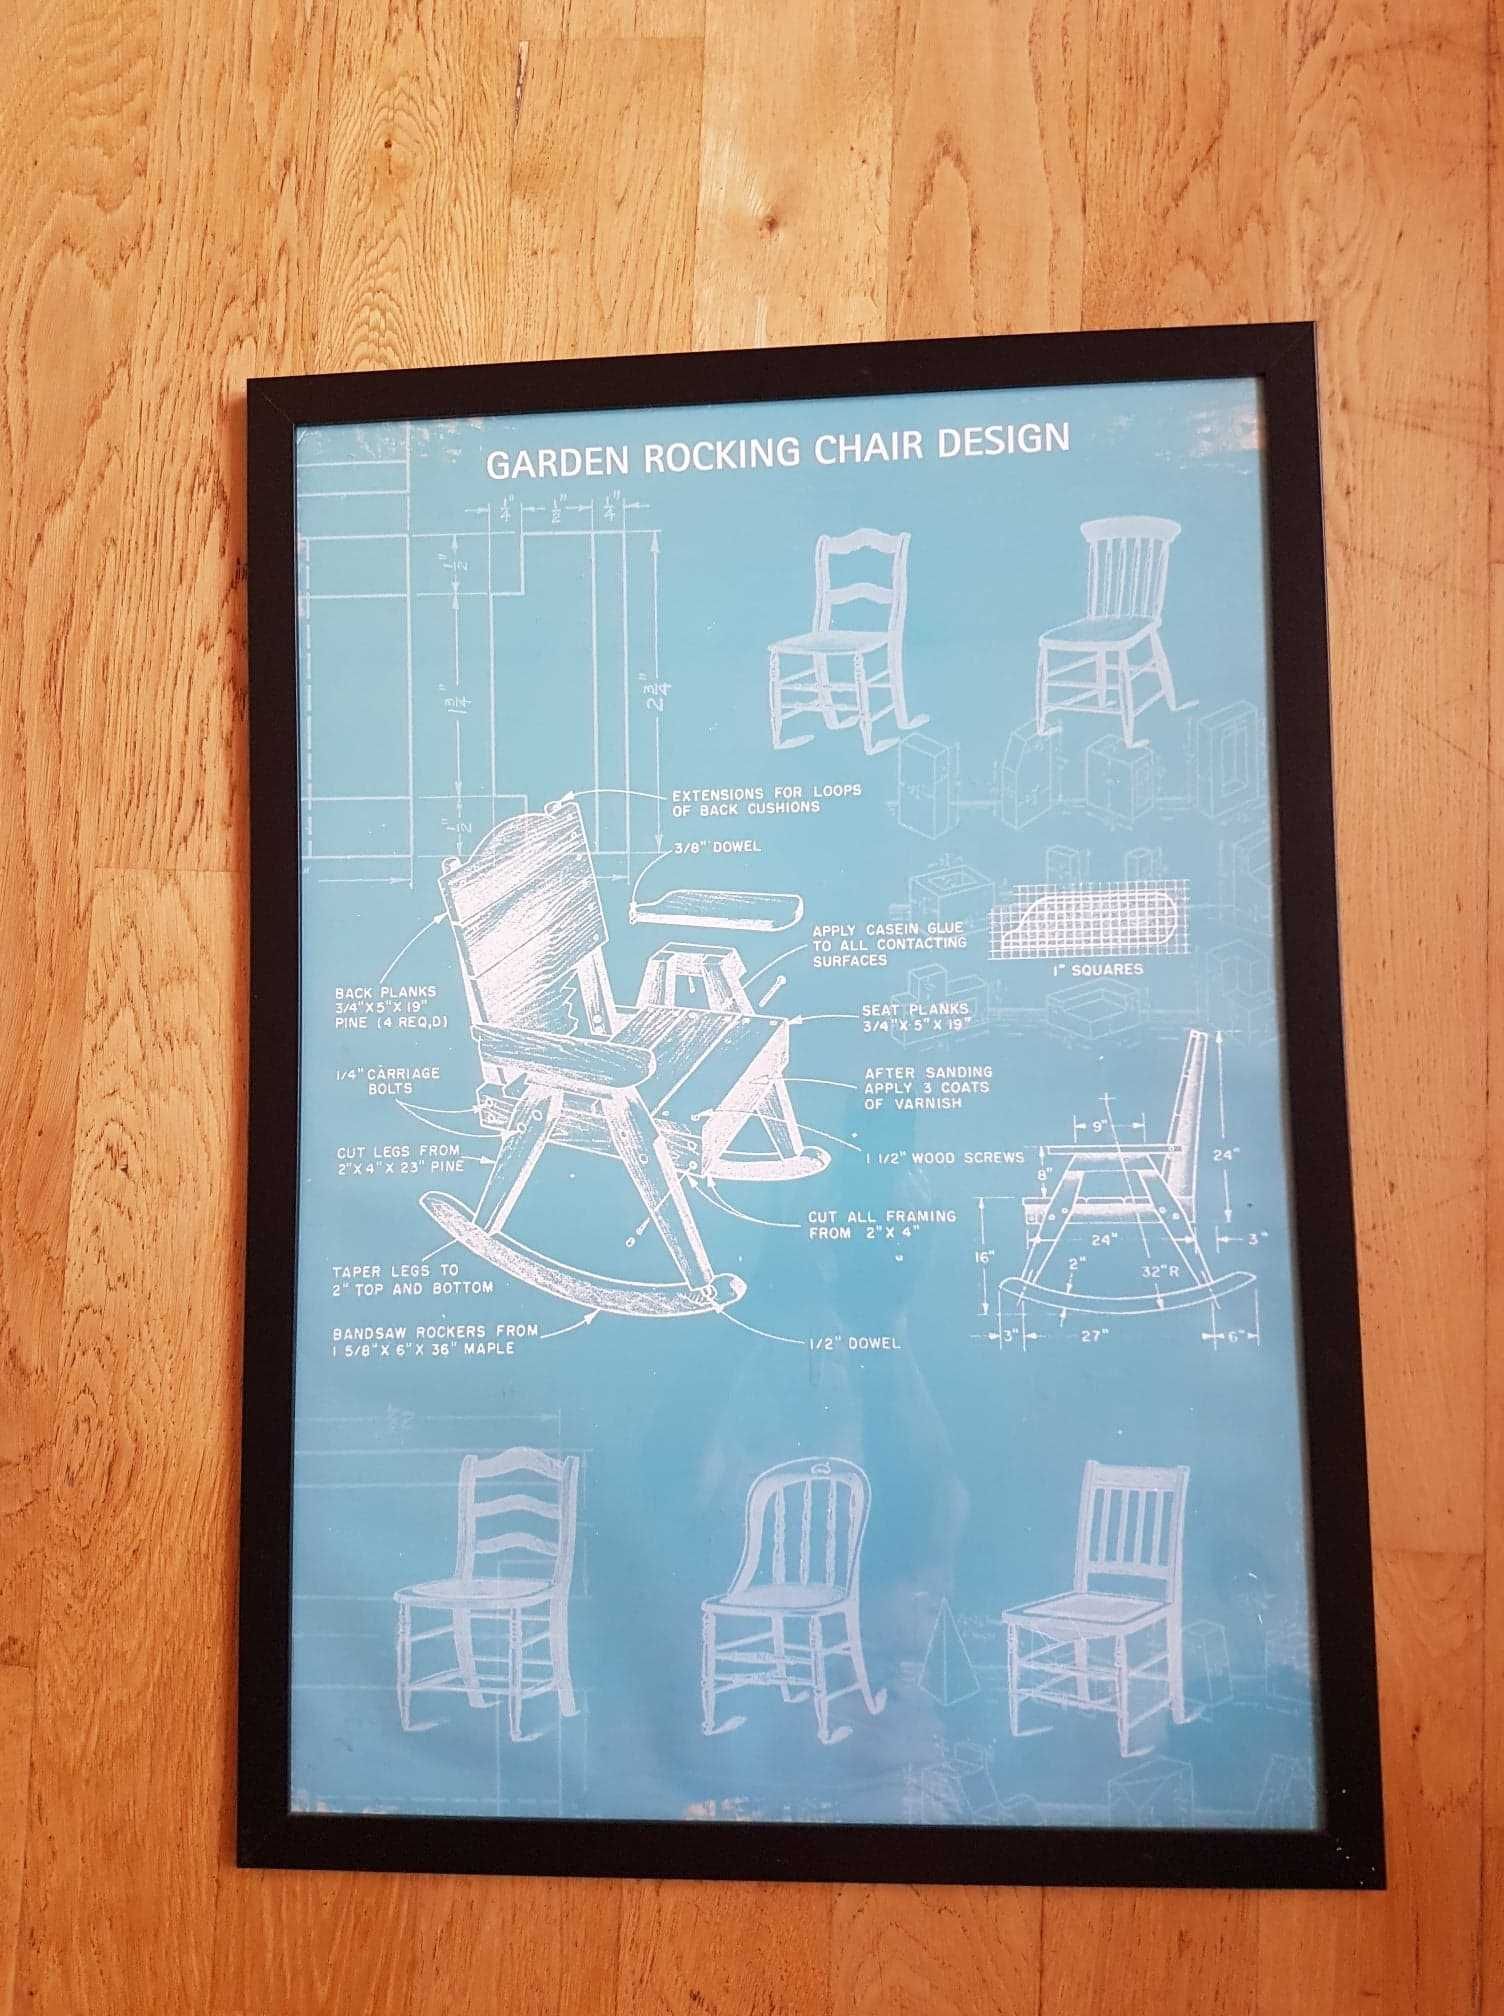 Obraz - Plakat KULTOWY IKEA "Garden Rocking Chair Design" RAMA 54X74